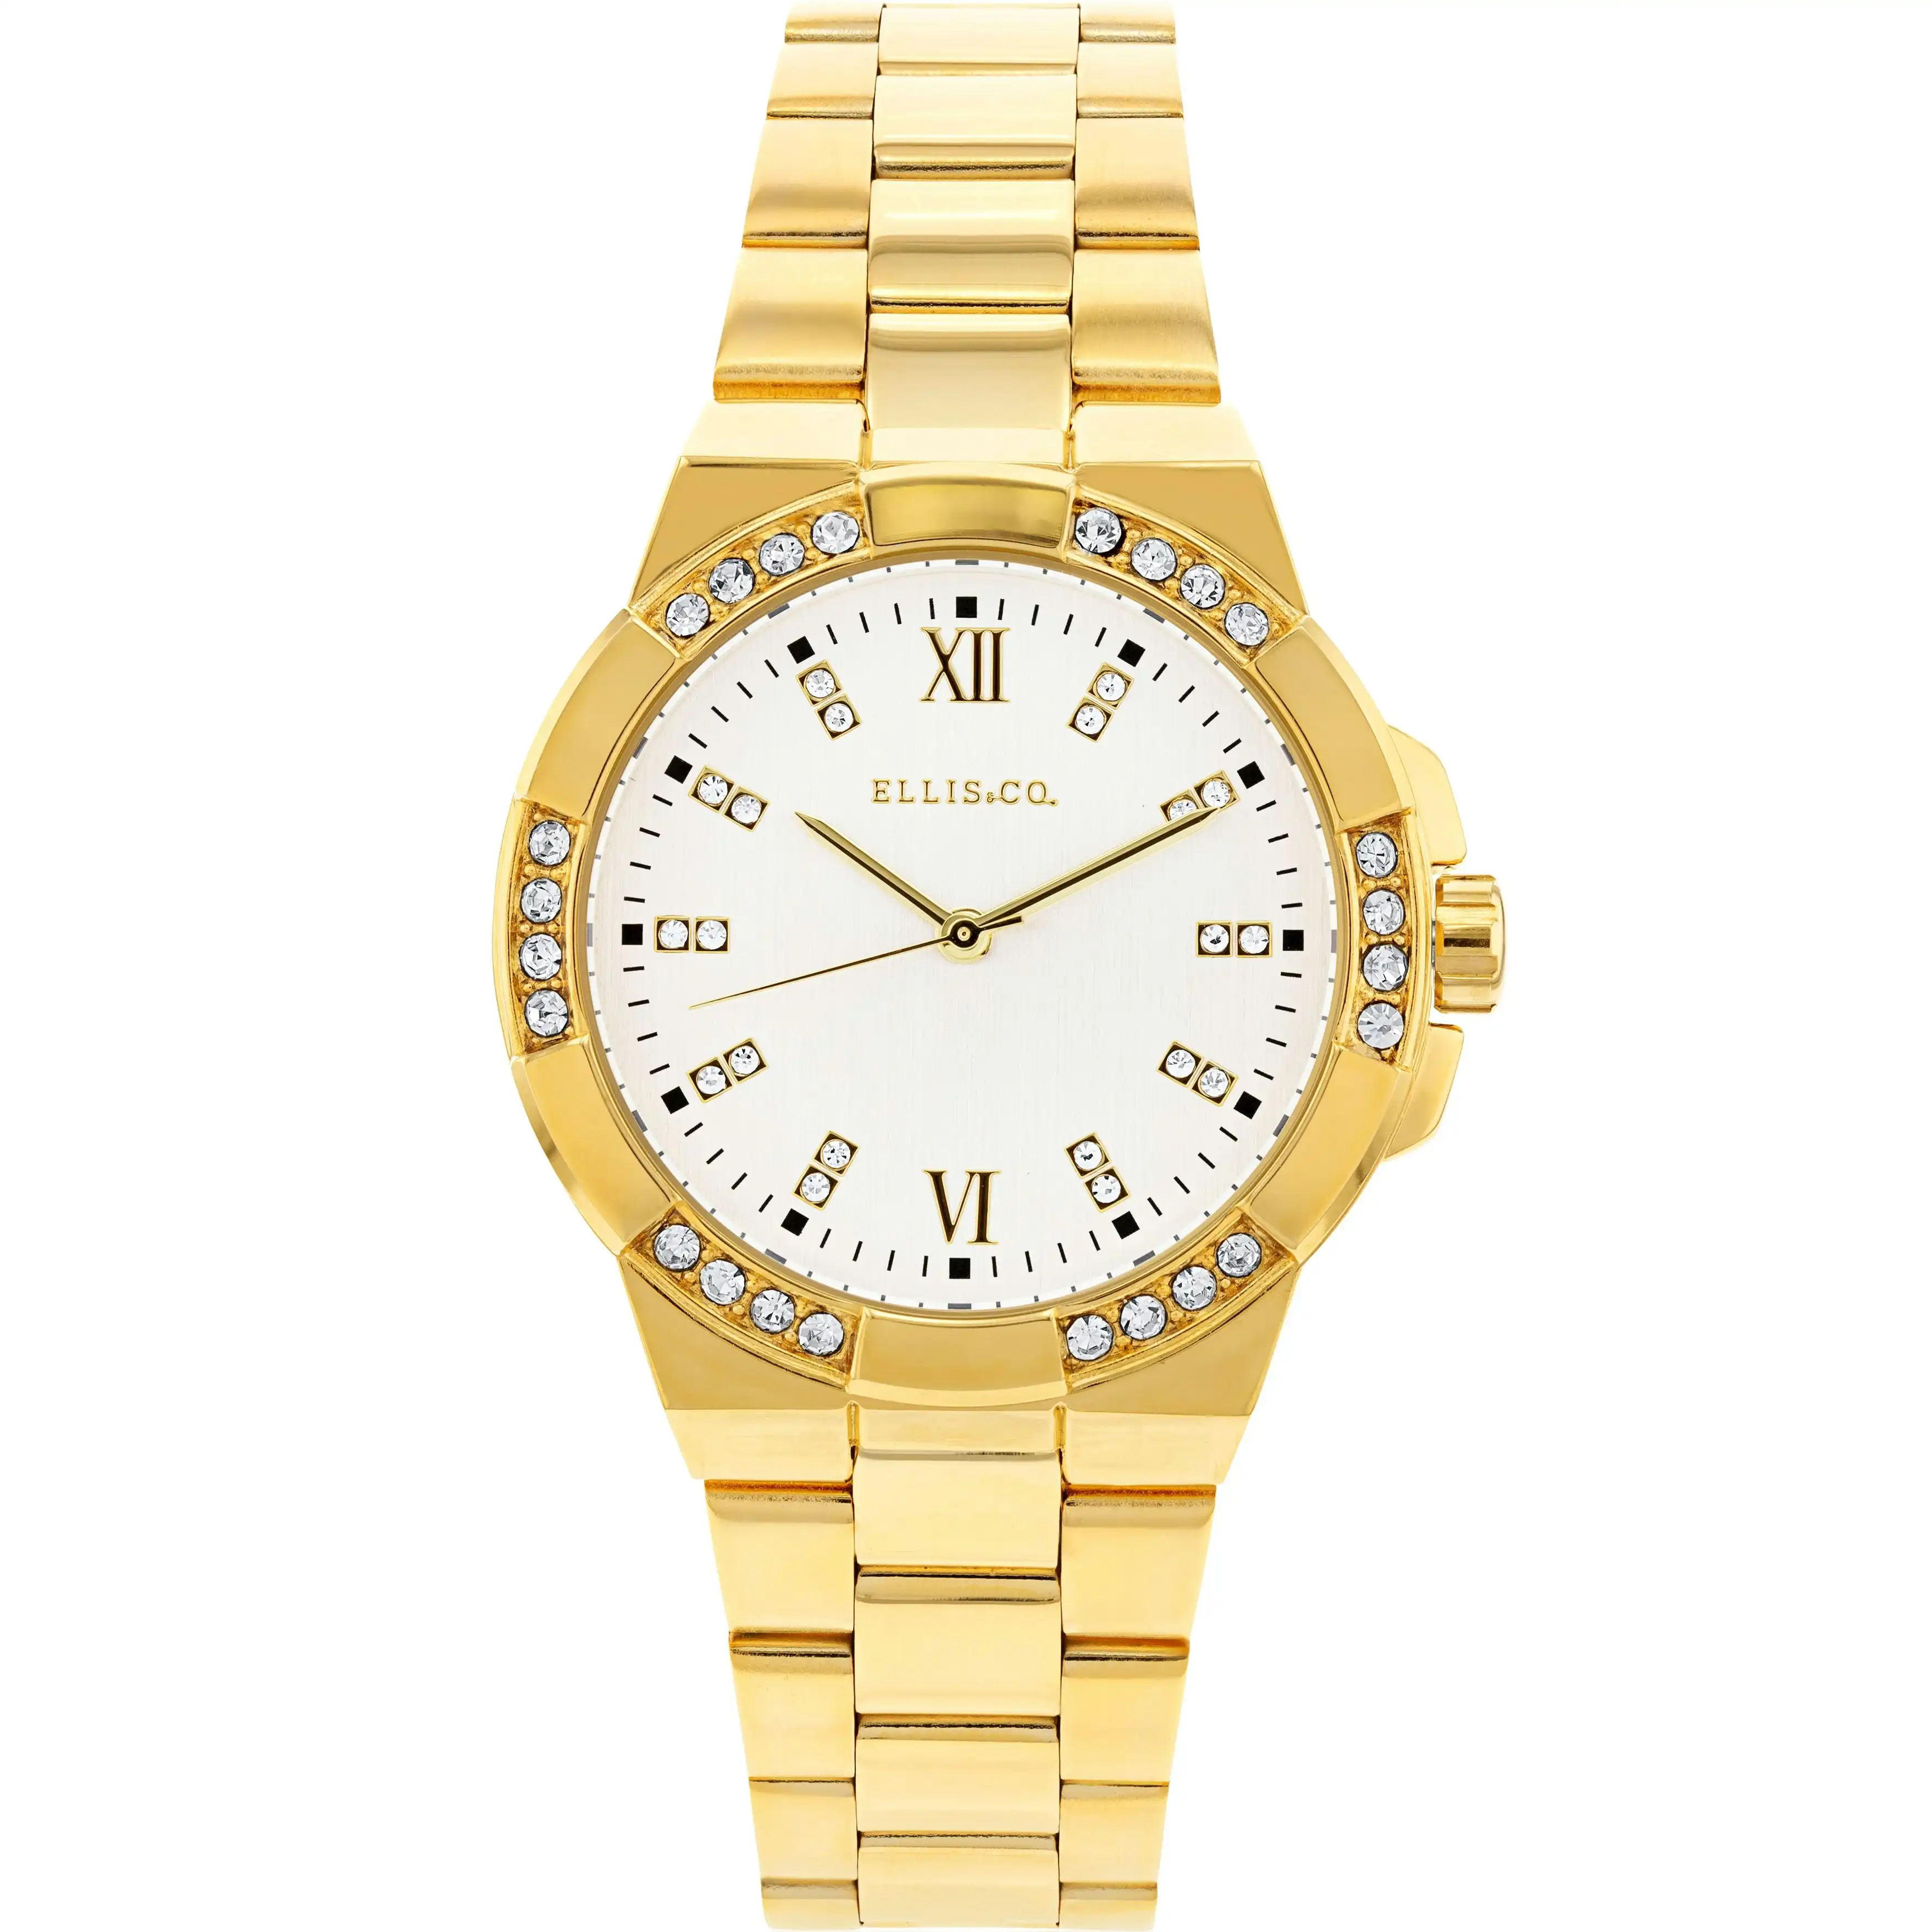 Ellis & Co 'Alyse' Gold Plated Women's Watch